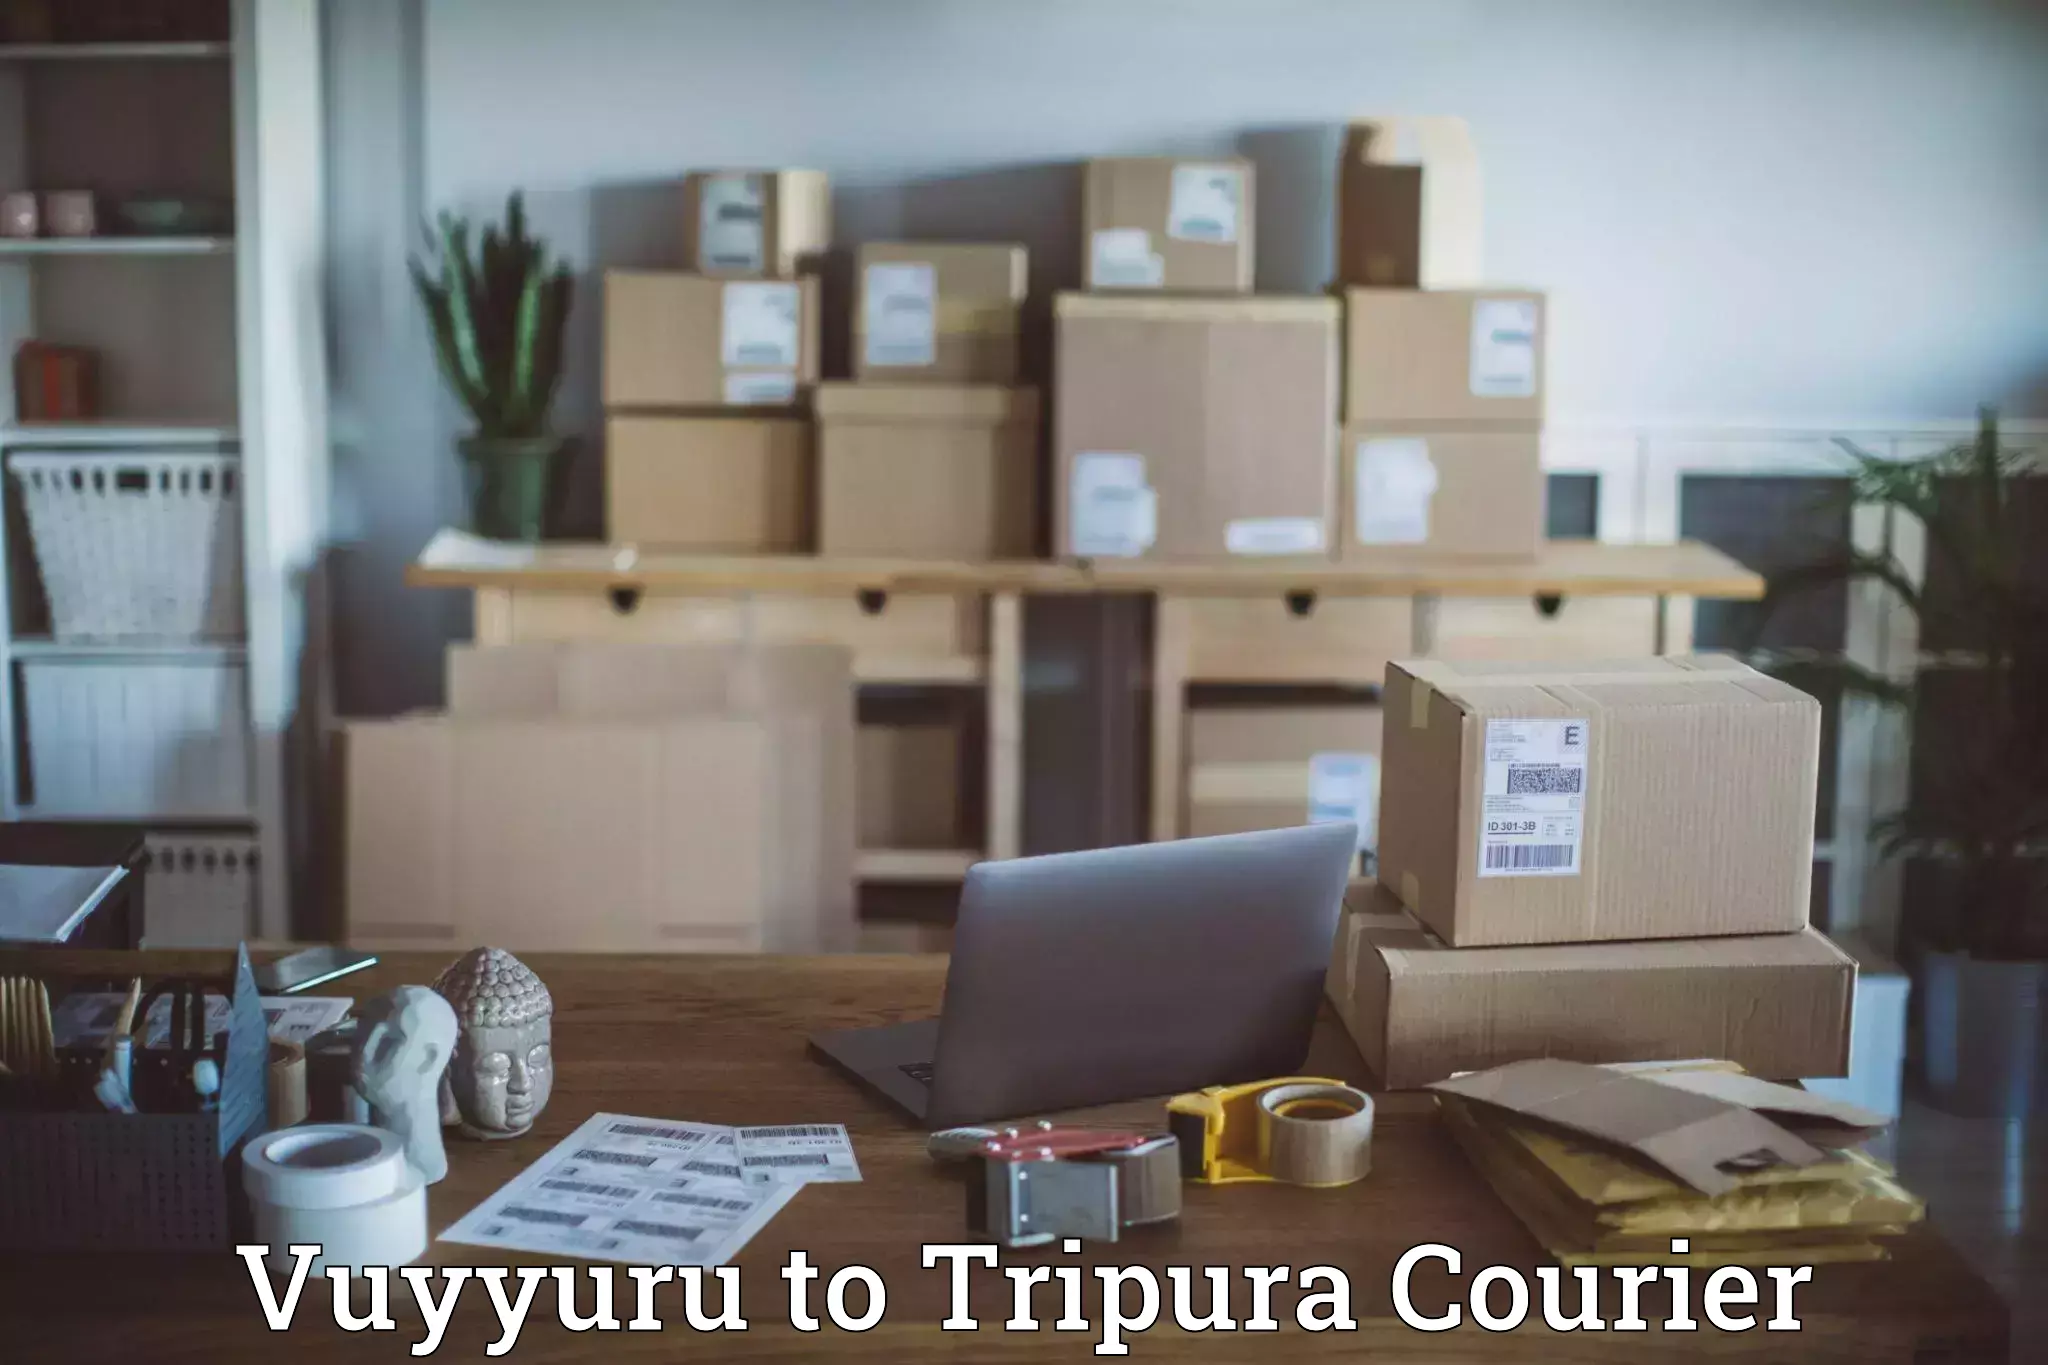 Bulk shipping discounts in Vuyyuru to Udaipur Tripura